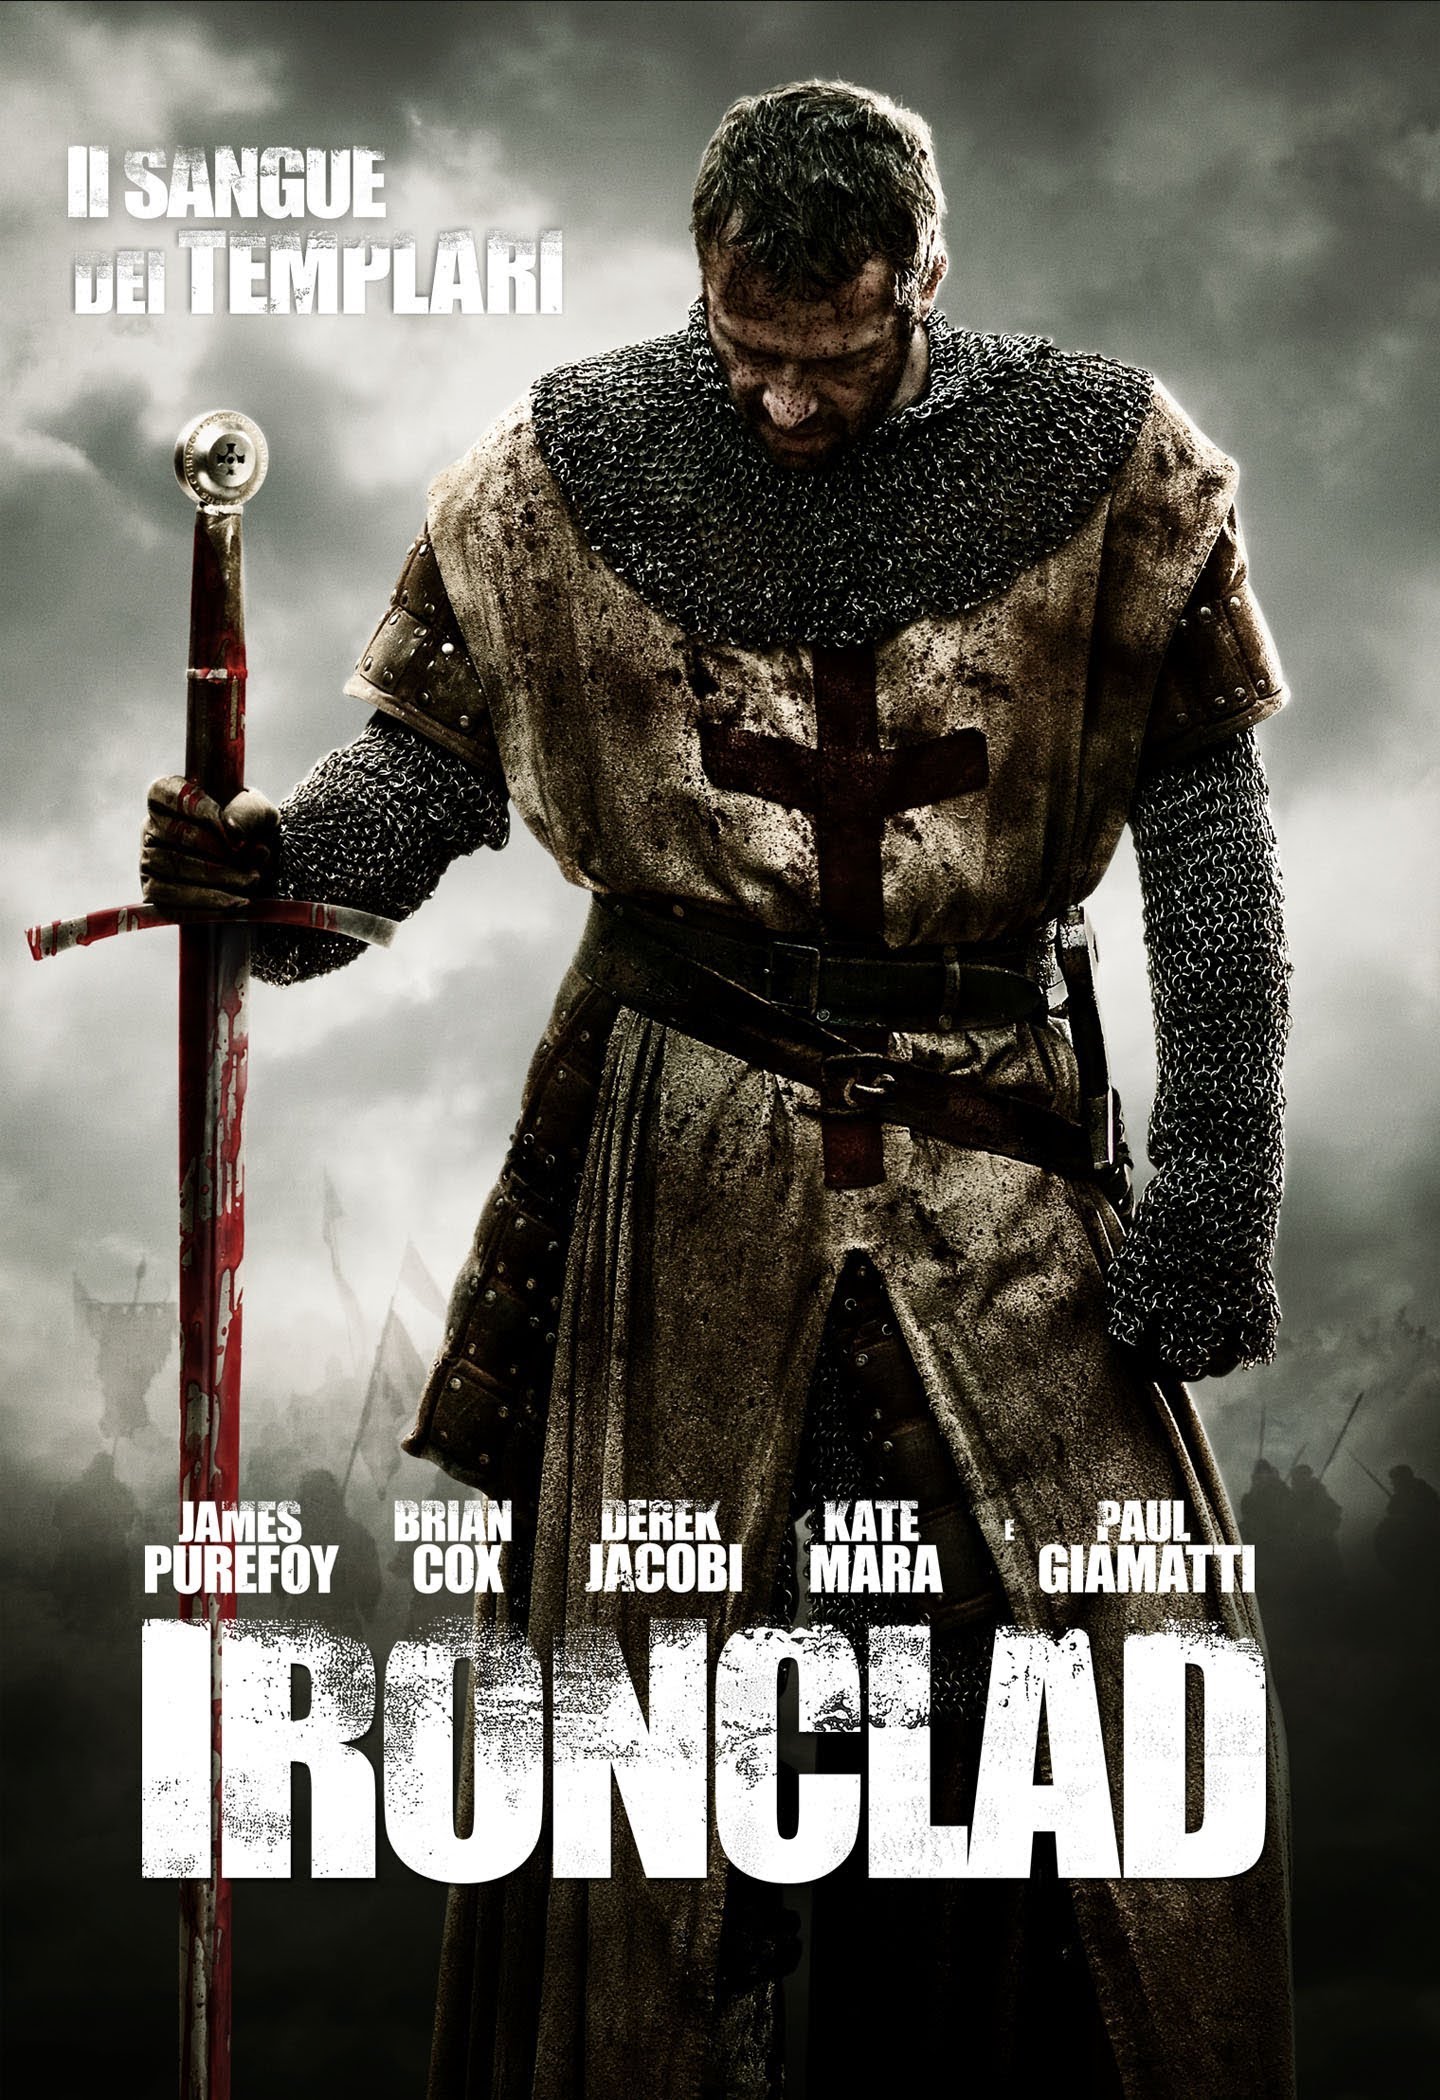 Ironclad [HD] (2011)